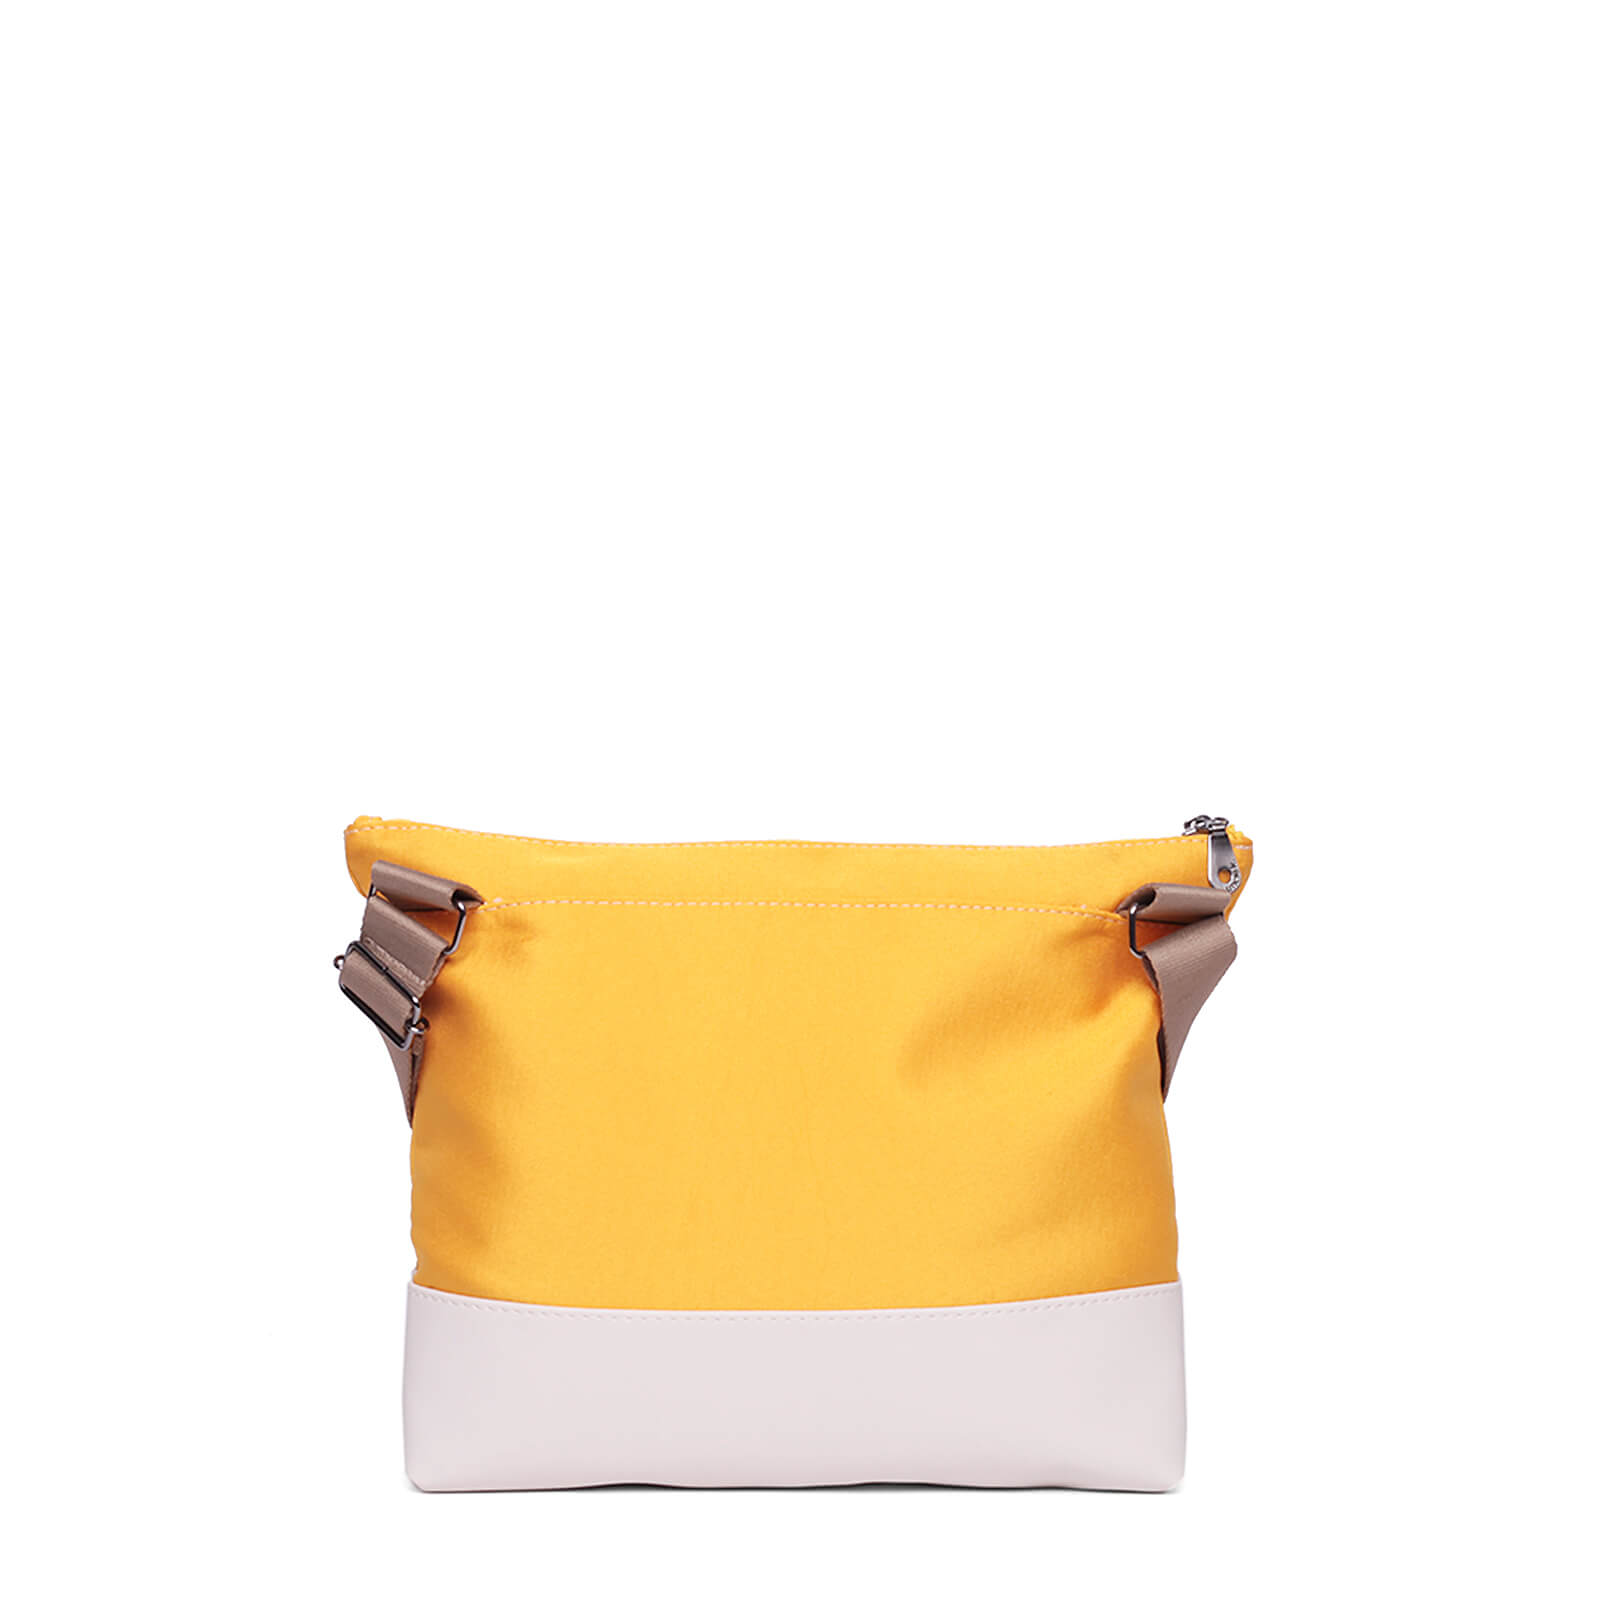 bolsa-tiracolo-nylon-emb-61114-unclek-amarelo-off-white-5